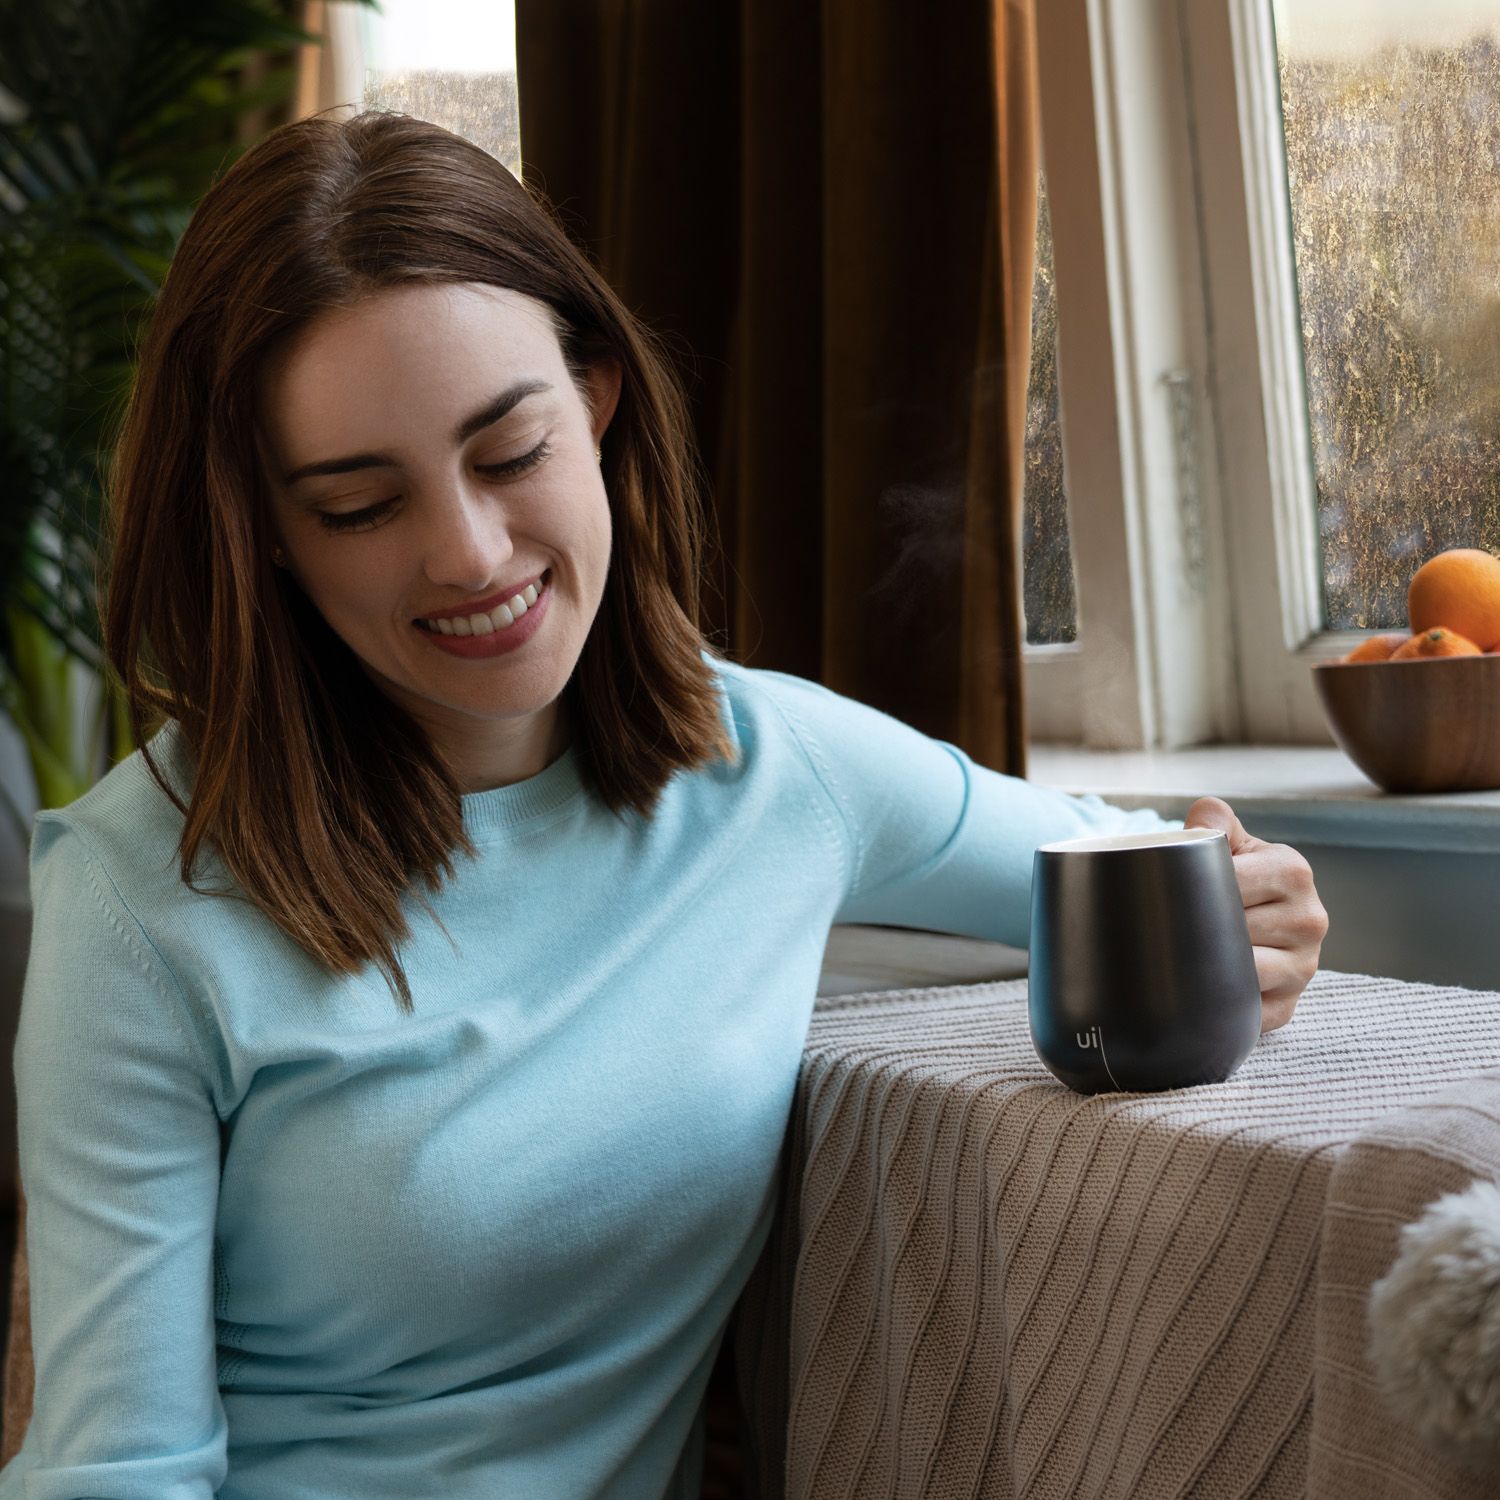 OHOM's UI Mug: This Self-Heating Ceramic Mug and Warmer Set Keeps Your  Drink Hot and Phone Charged